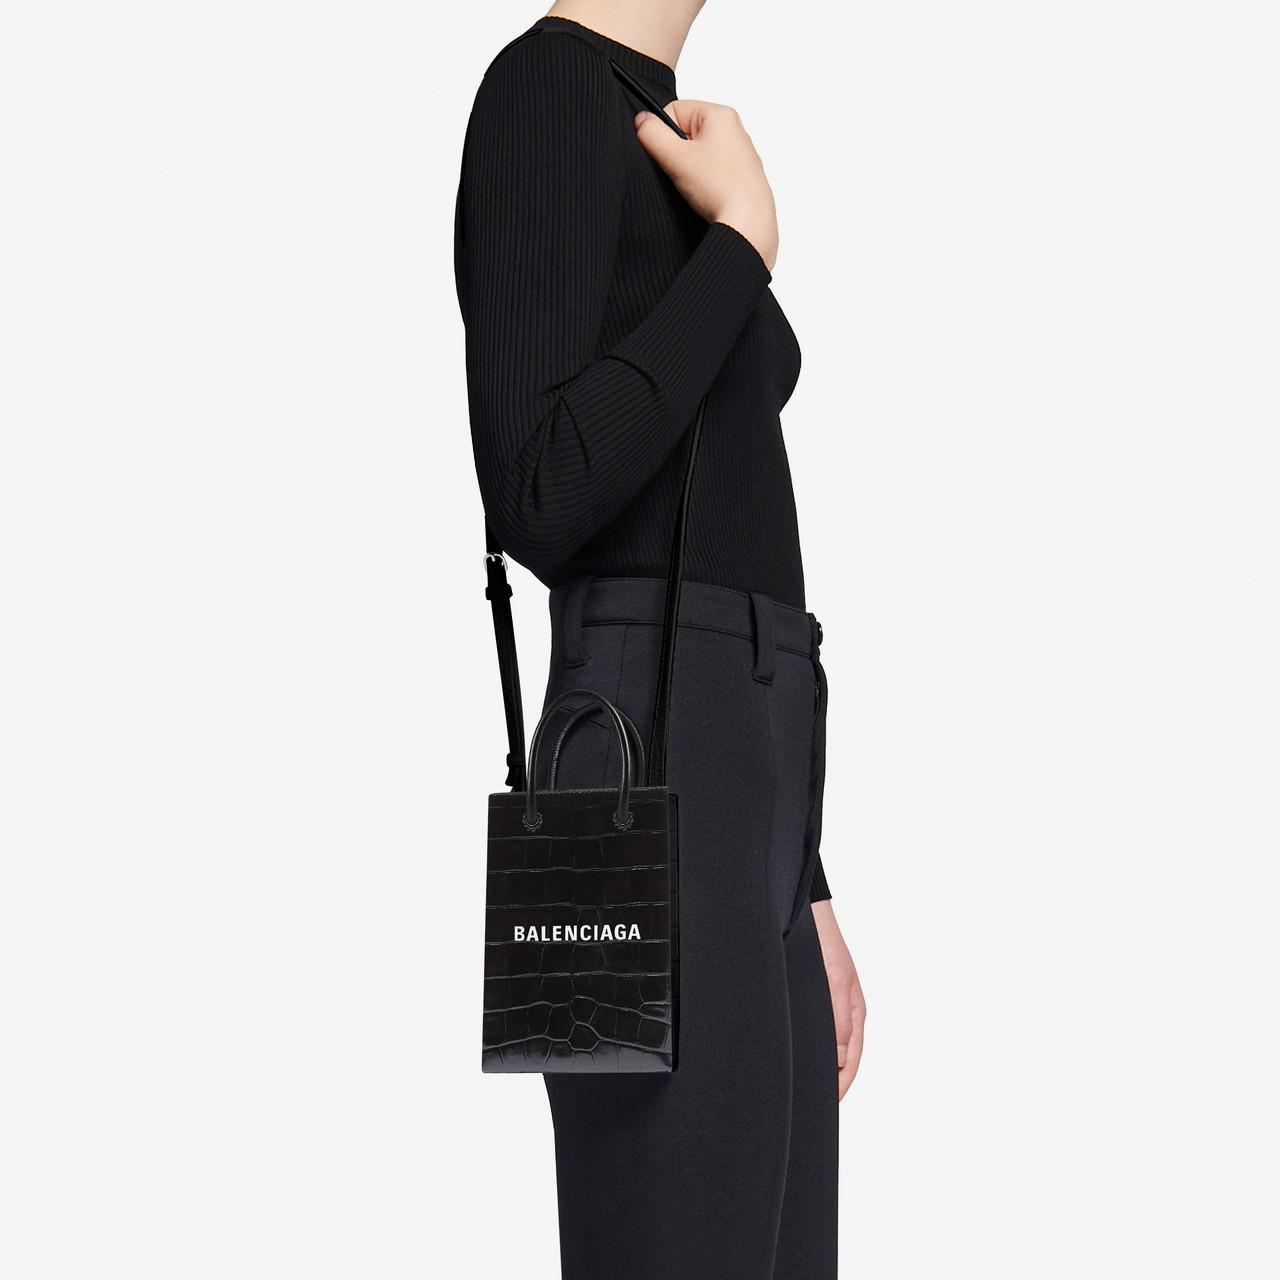 Balenciaga Leather Shopping Phone Holder in Black | Lyst